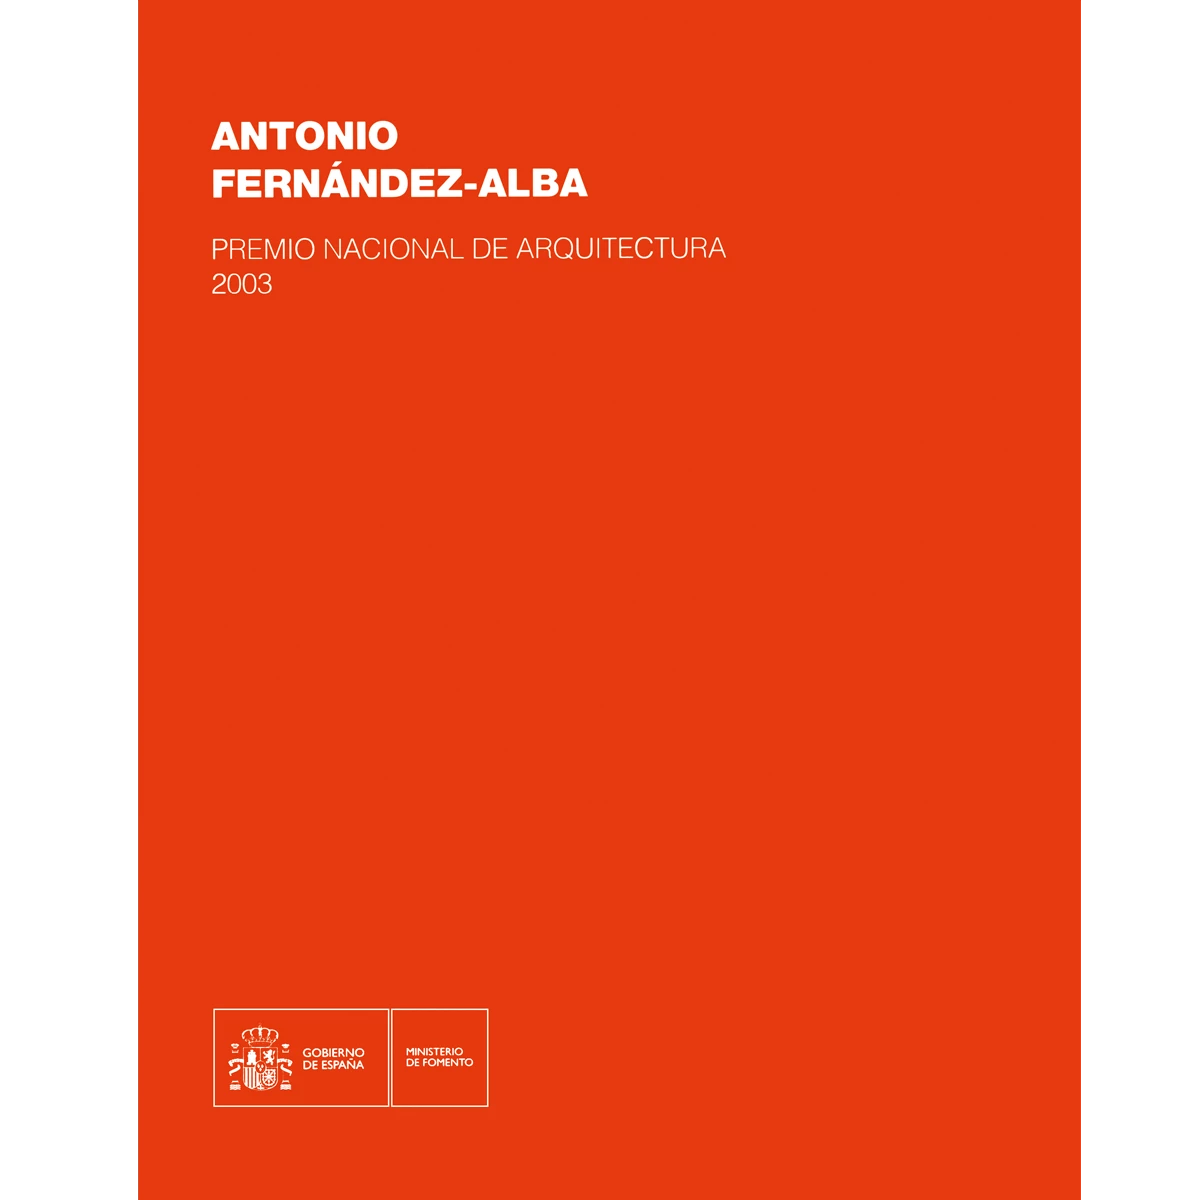 Antonio Fernández-Alba